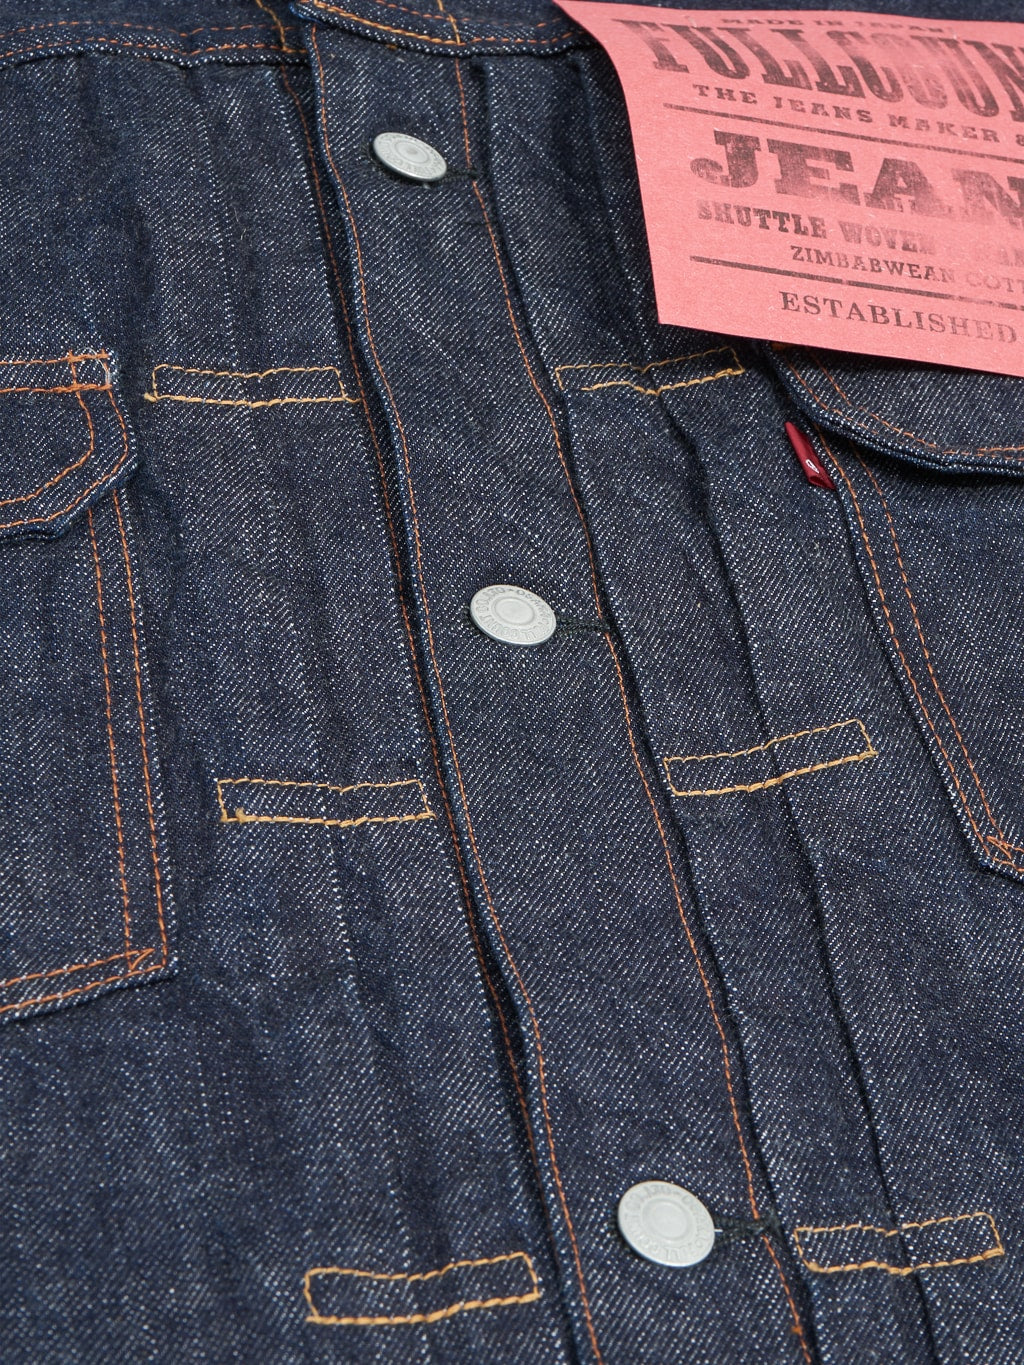 fullcount 2102 type 2 denim jacket selvedge buttons